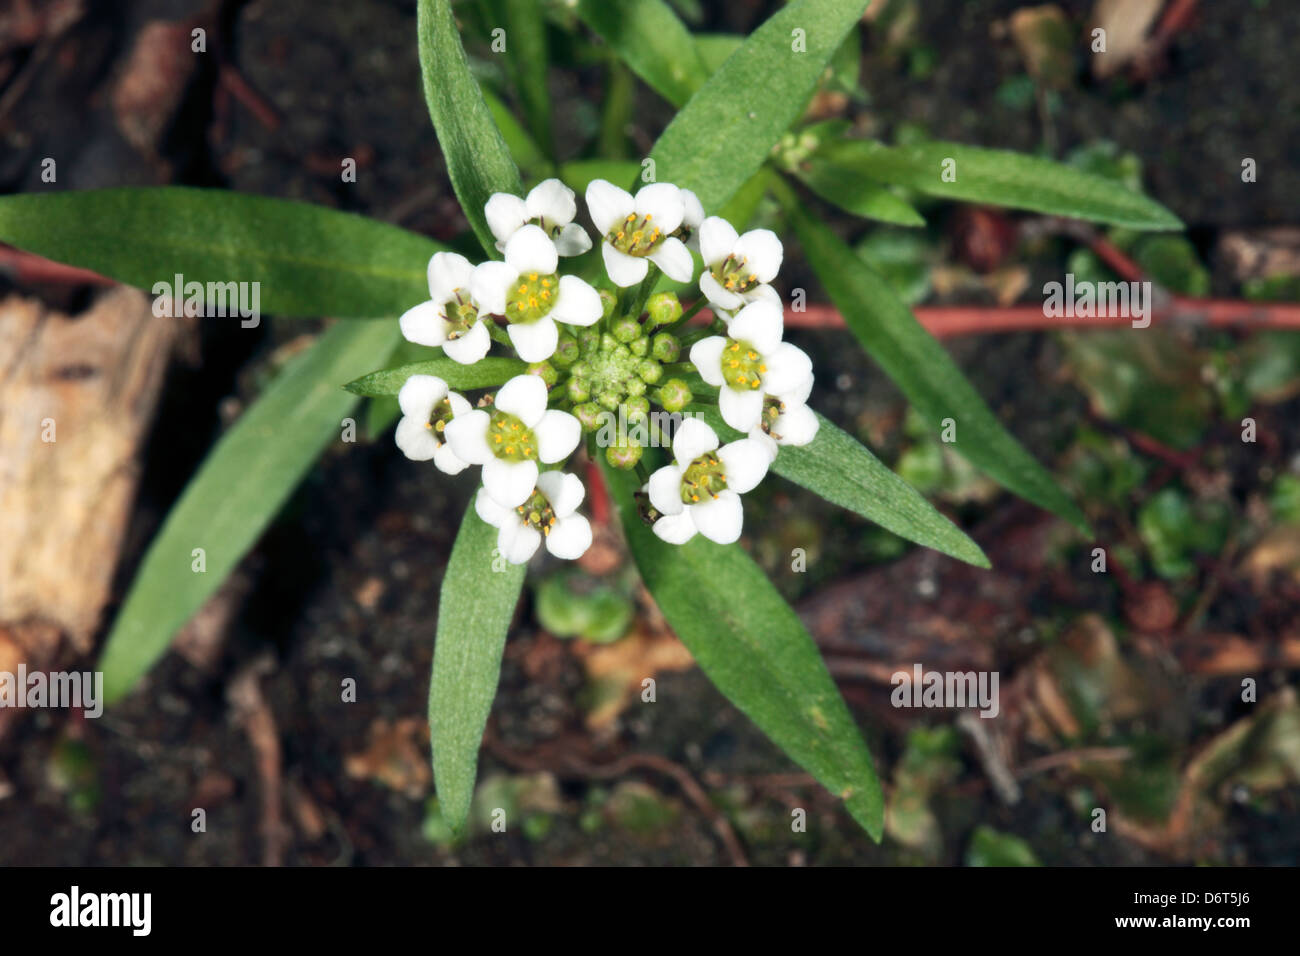 Close-up of Alyssum showing details of flower head- Alyssum maritima  [syn. A maritimum]- Family Brassicaceae Stock Photo